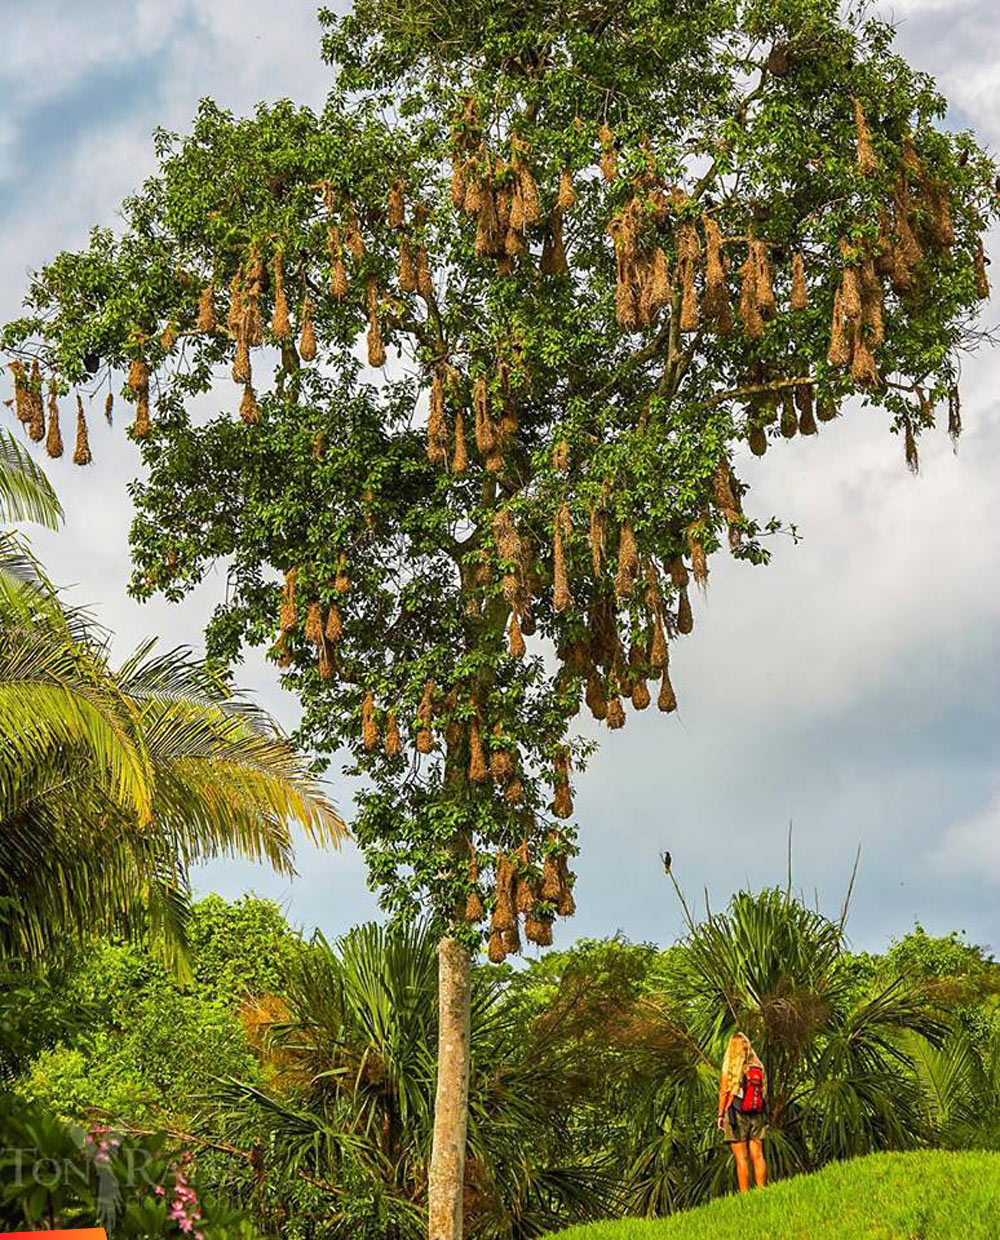 Tree full of hanging orependola nests